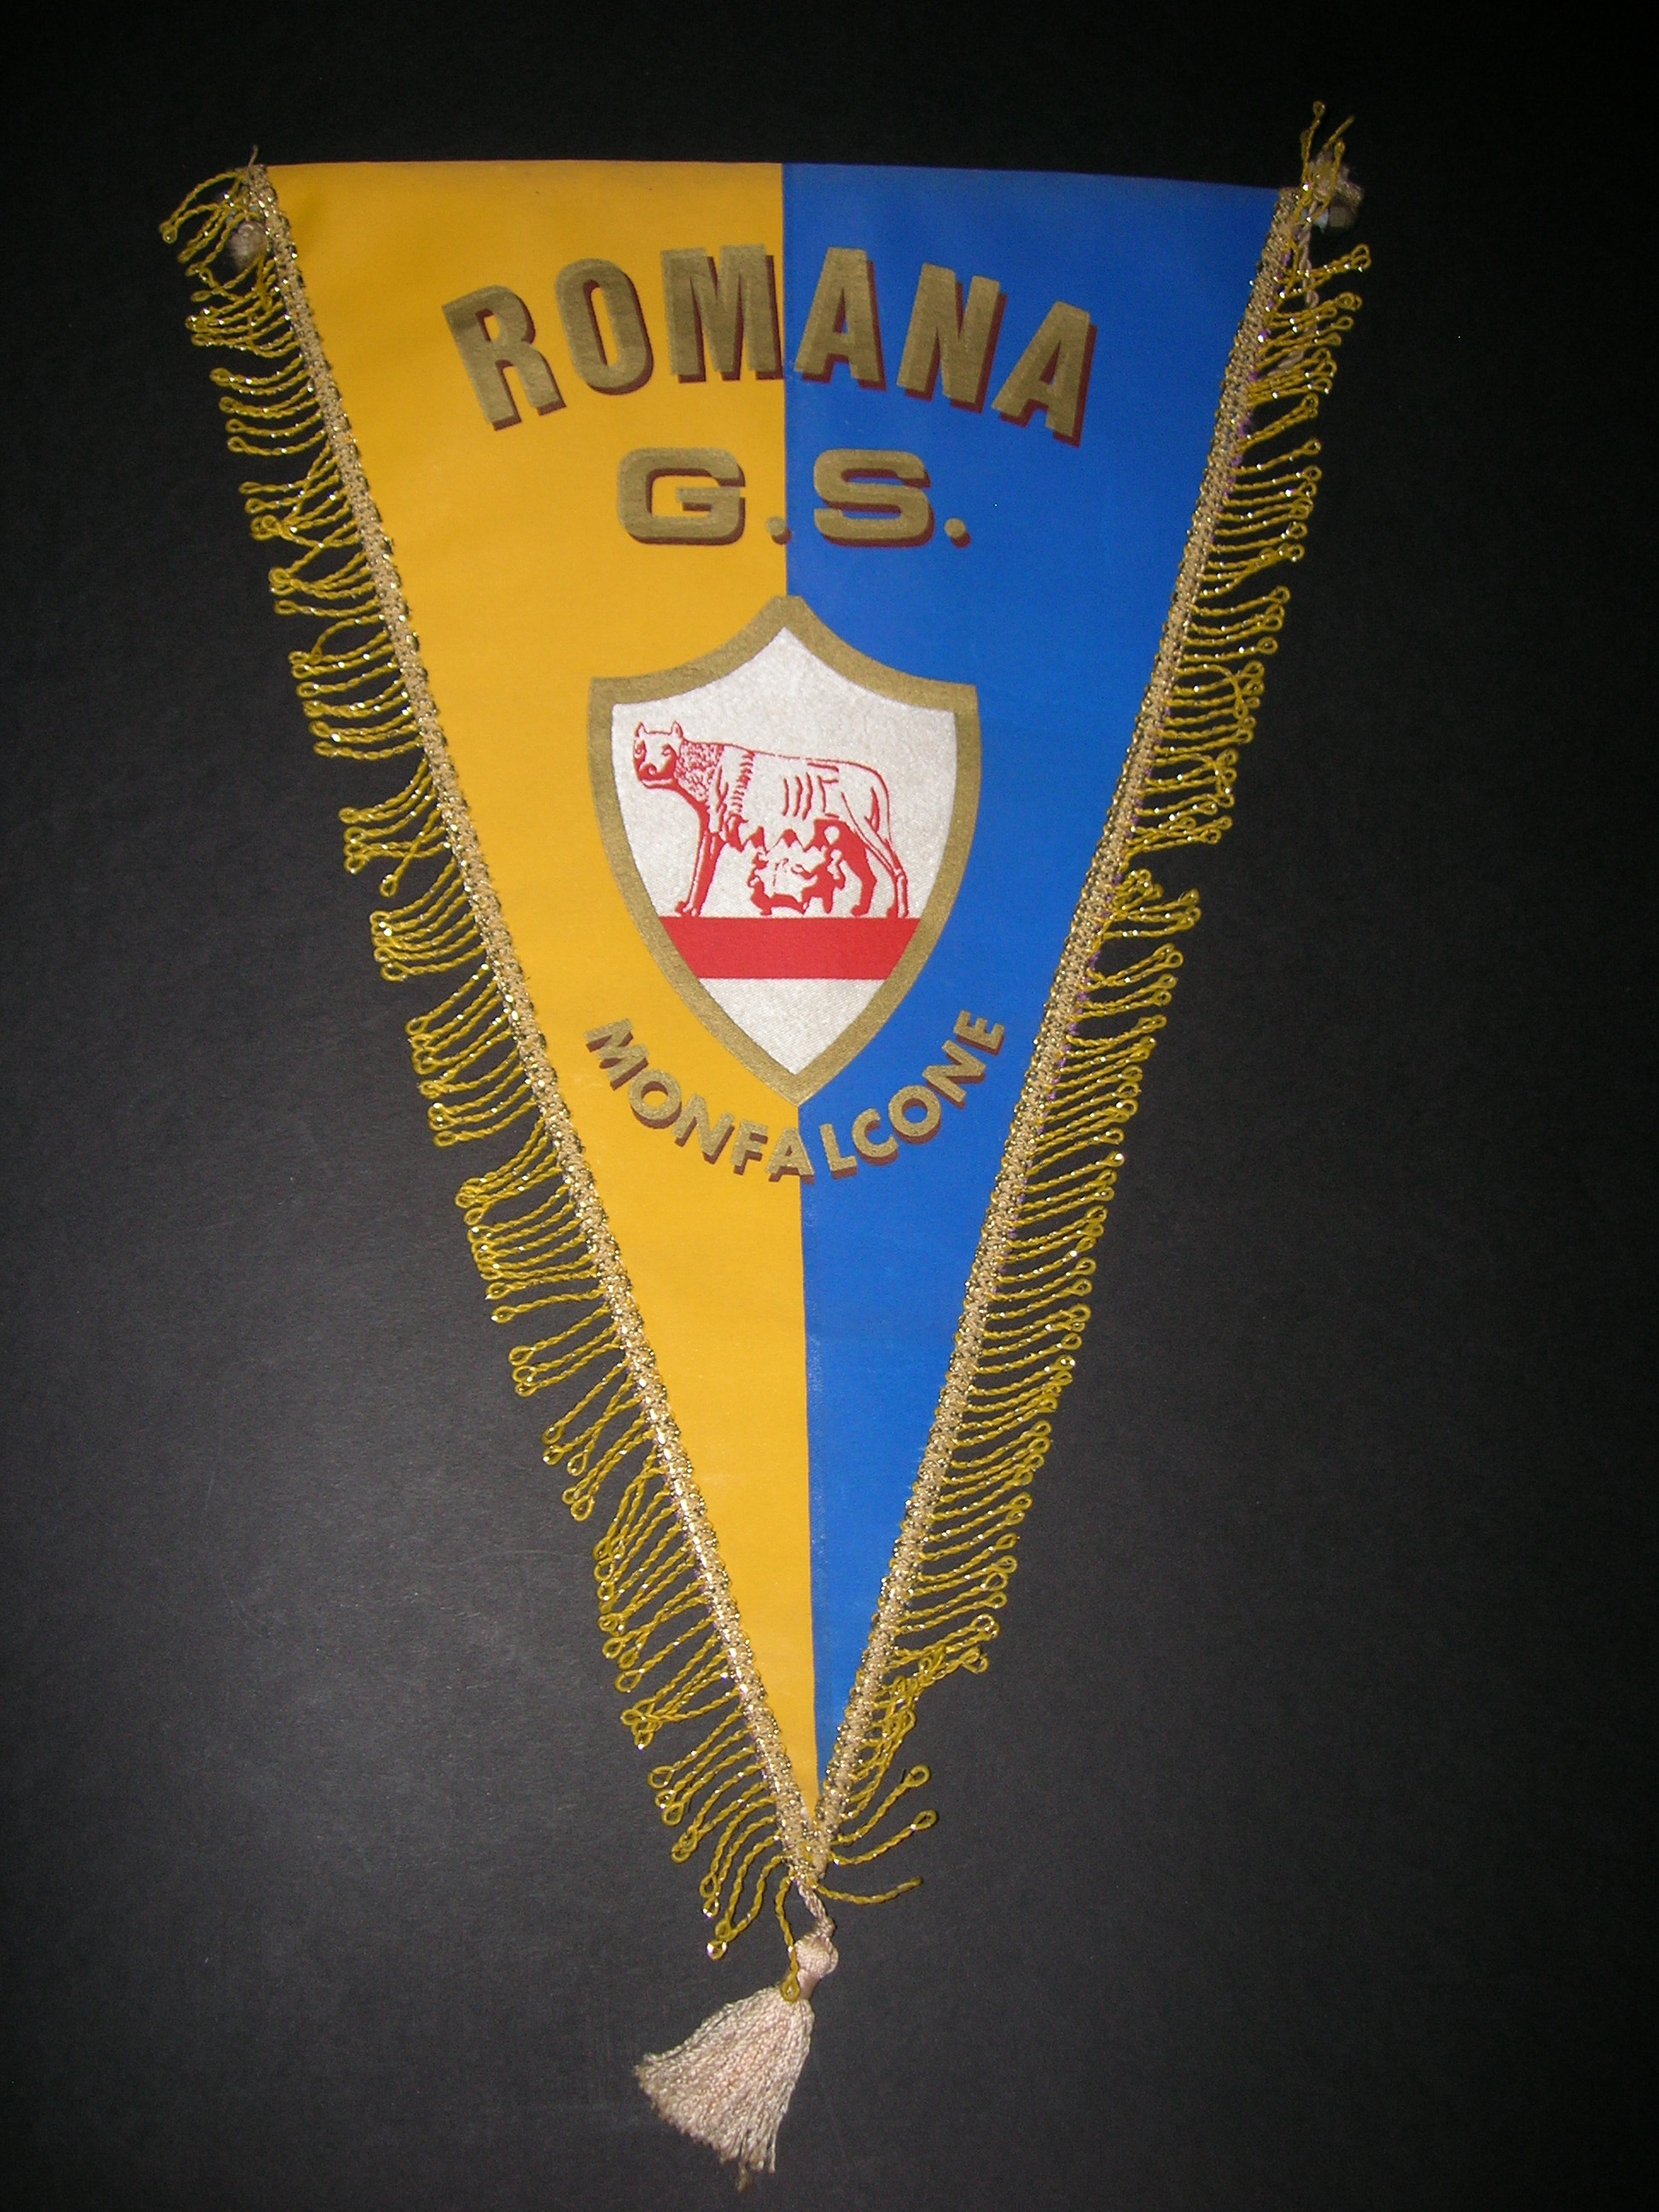 Romana  G S.  Monfalcone  GO  245